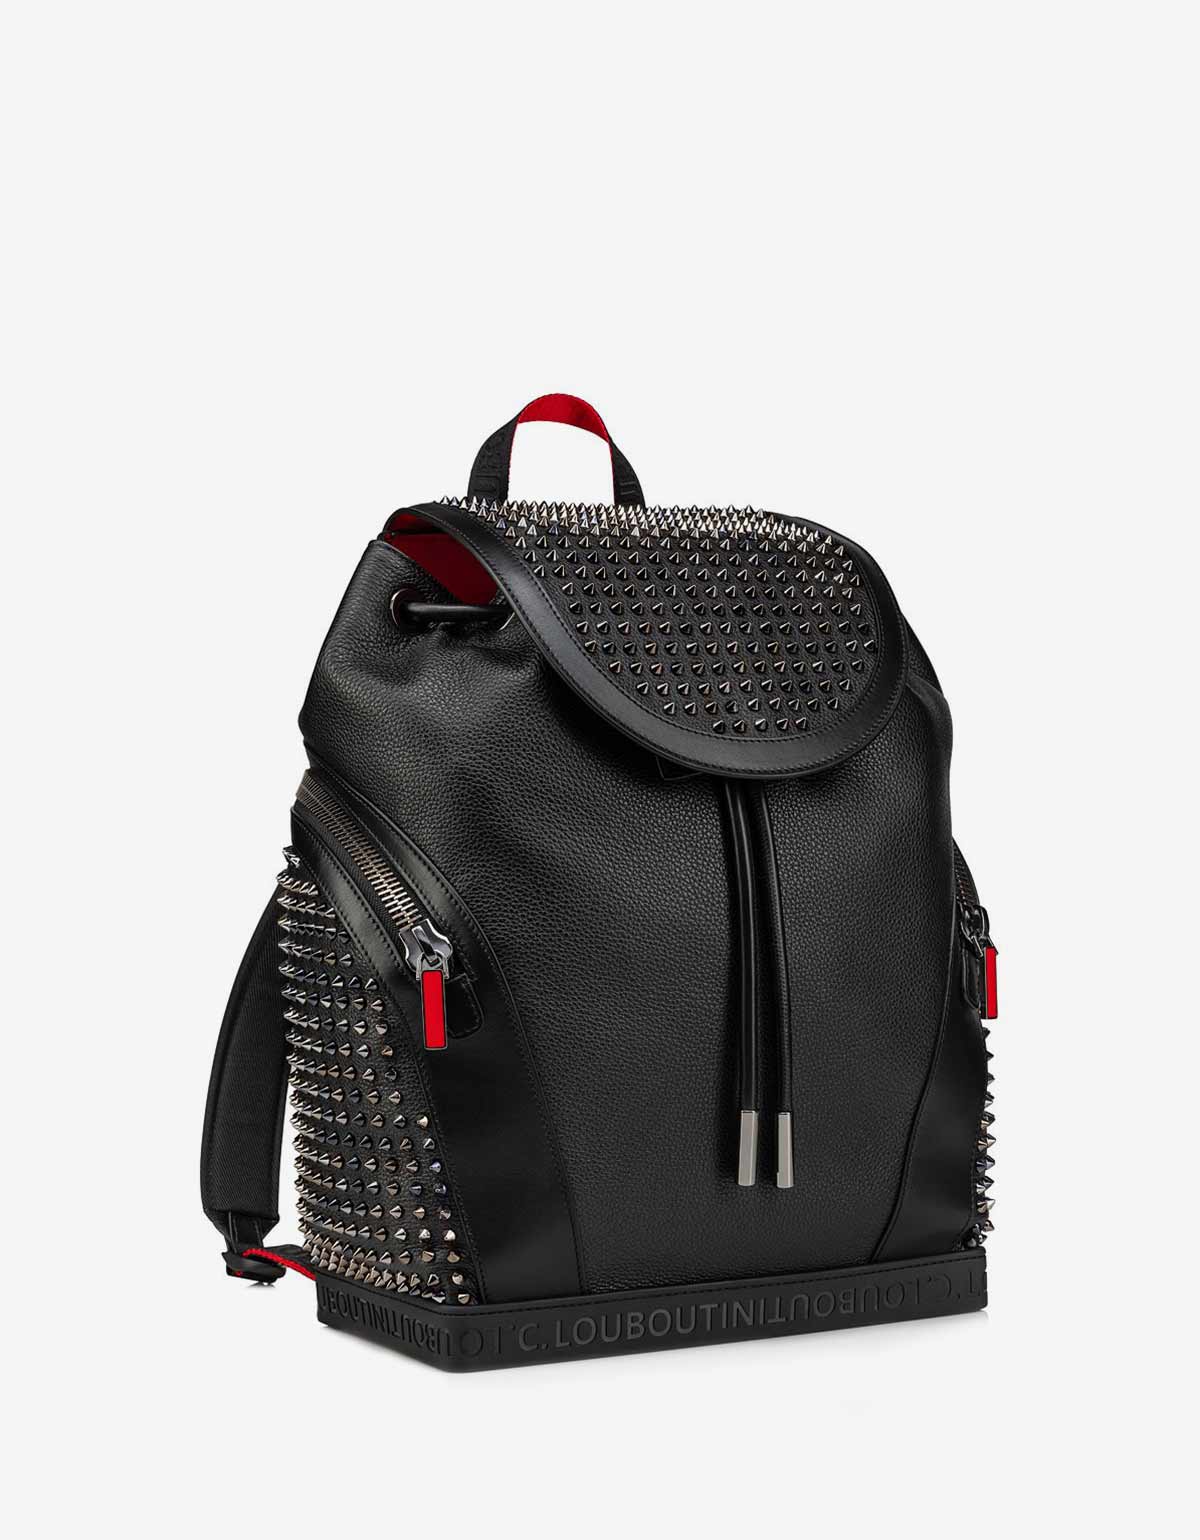 Christian Louboutin Explorafunk Black Leather Backpack